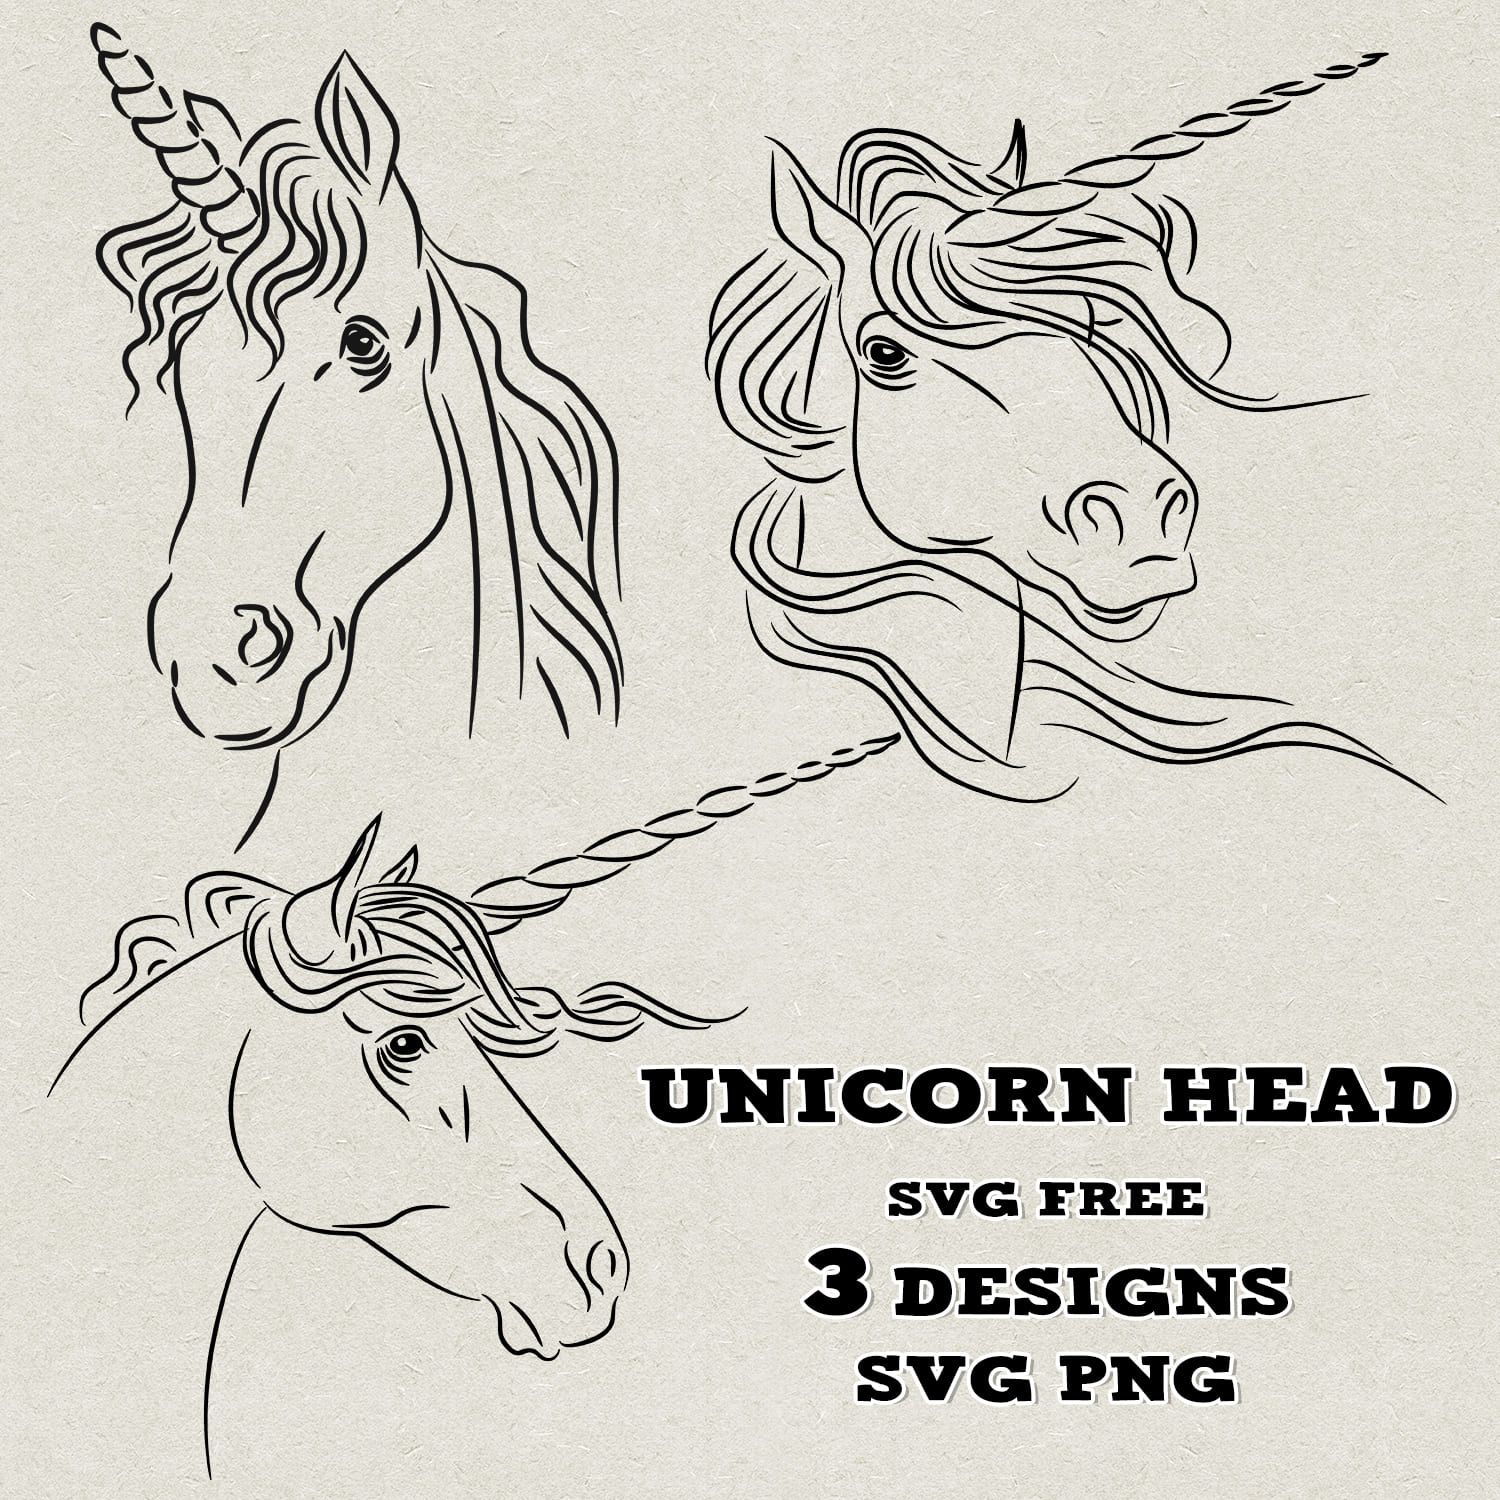 Unicorn Head SVG Free - main image preview.